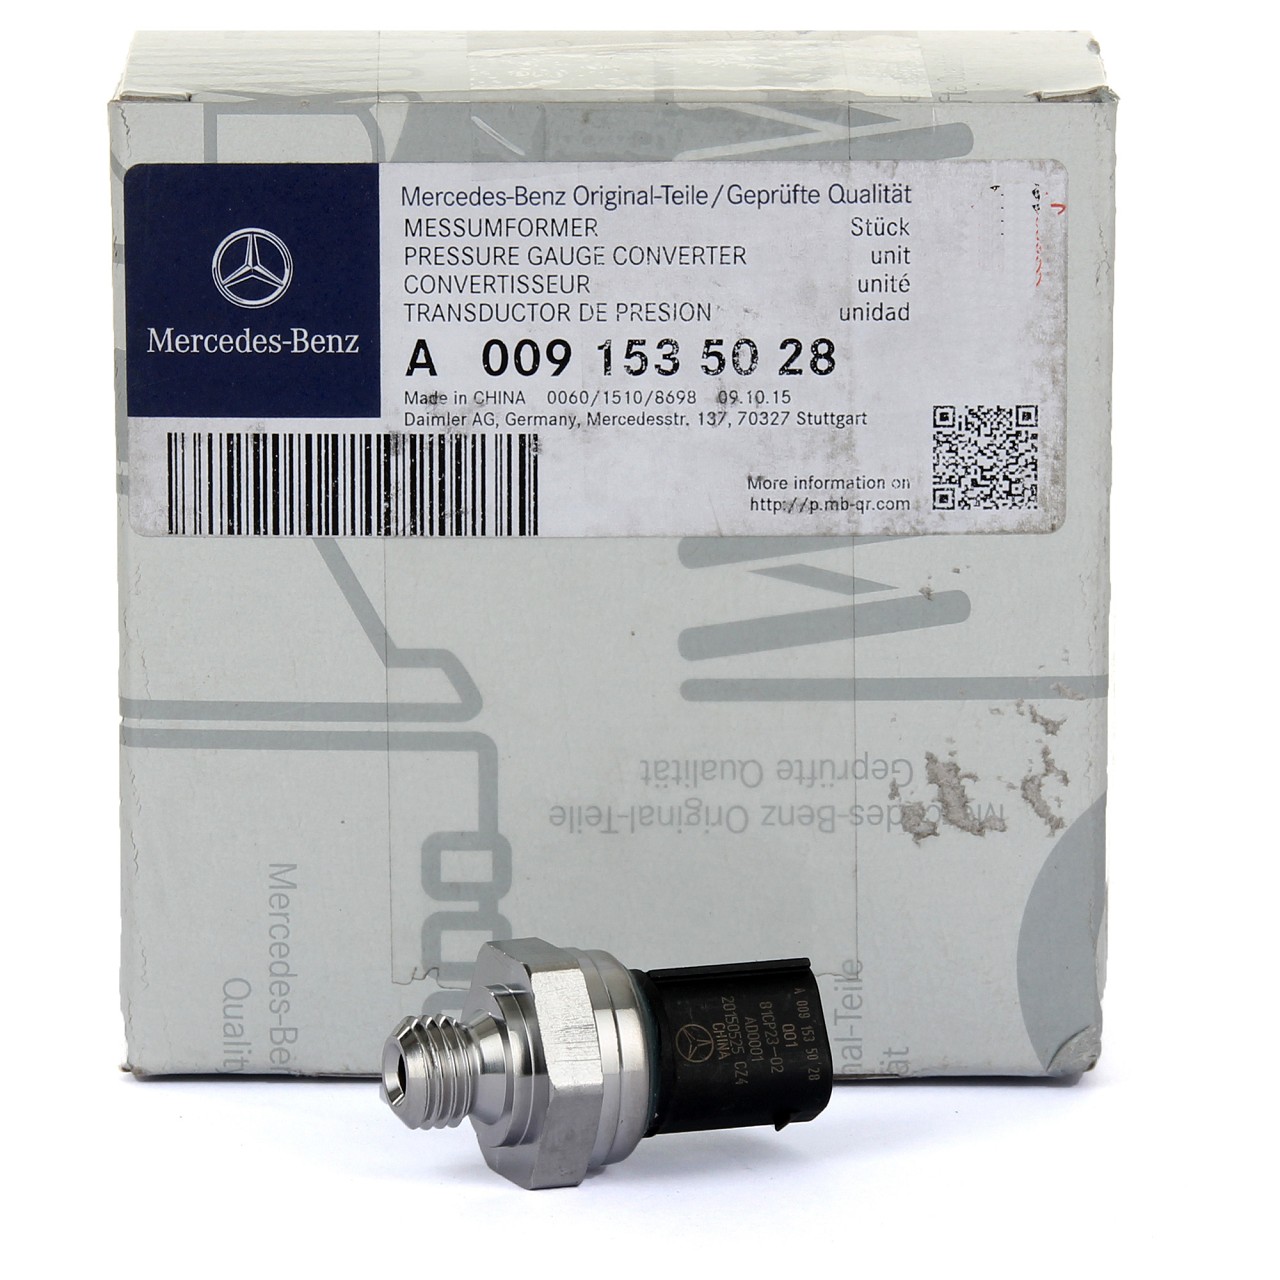 ORIGINAL Mercedes Autobatterie Batterie Starterbatterie 12V 62Ah  000982300826